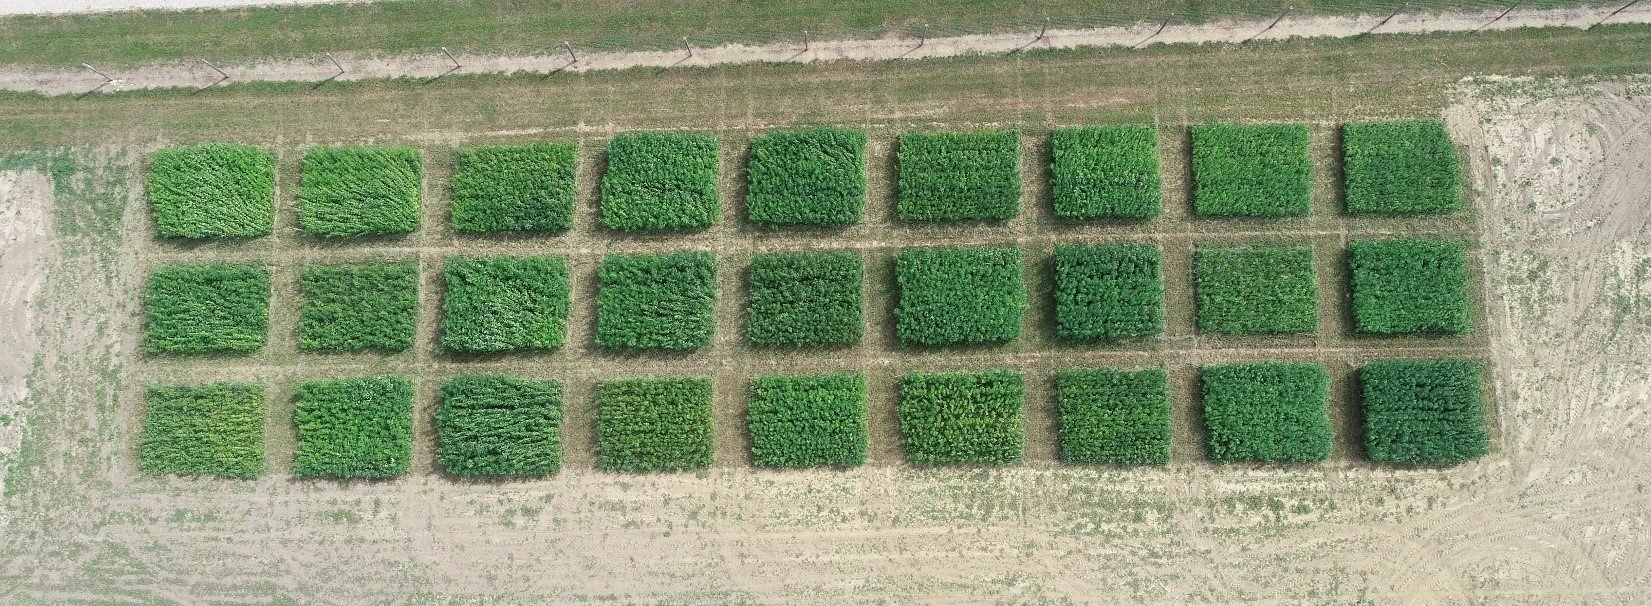 Image RGB industrial hemp plantation